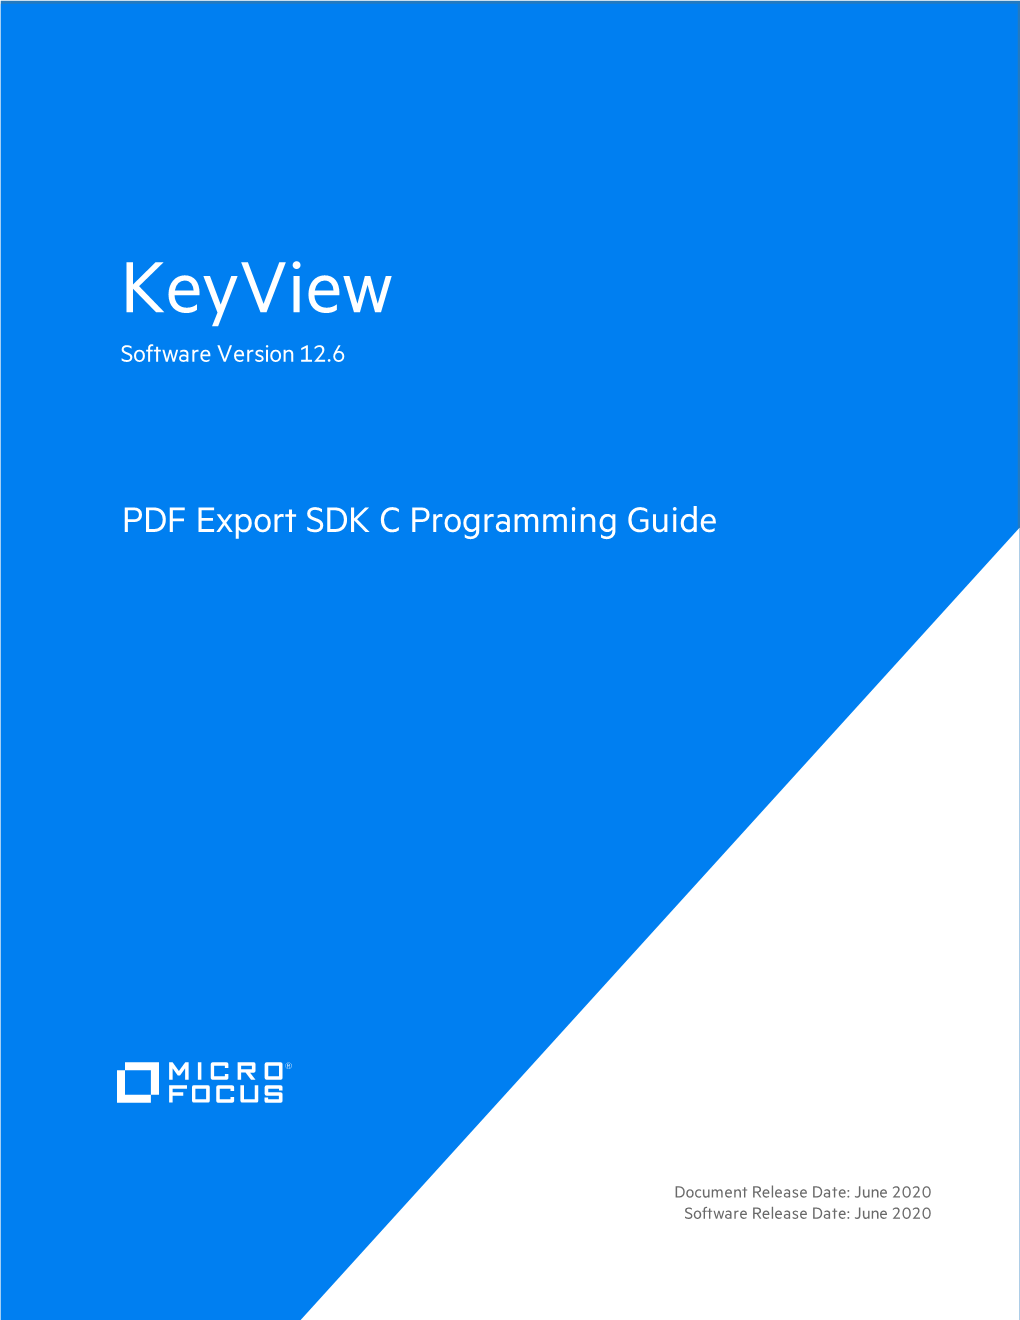 IDOL Keyview PDF Export SDK 12.6 C Programming Guide